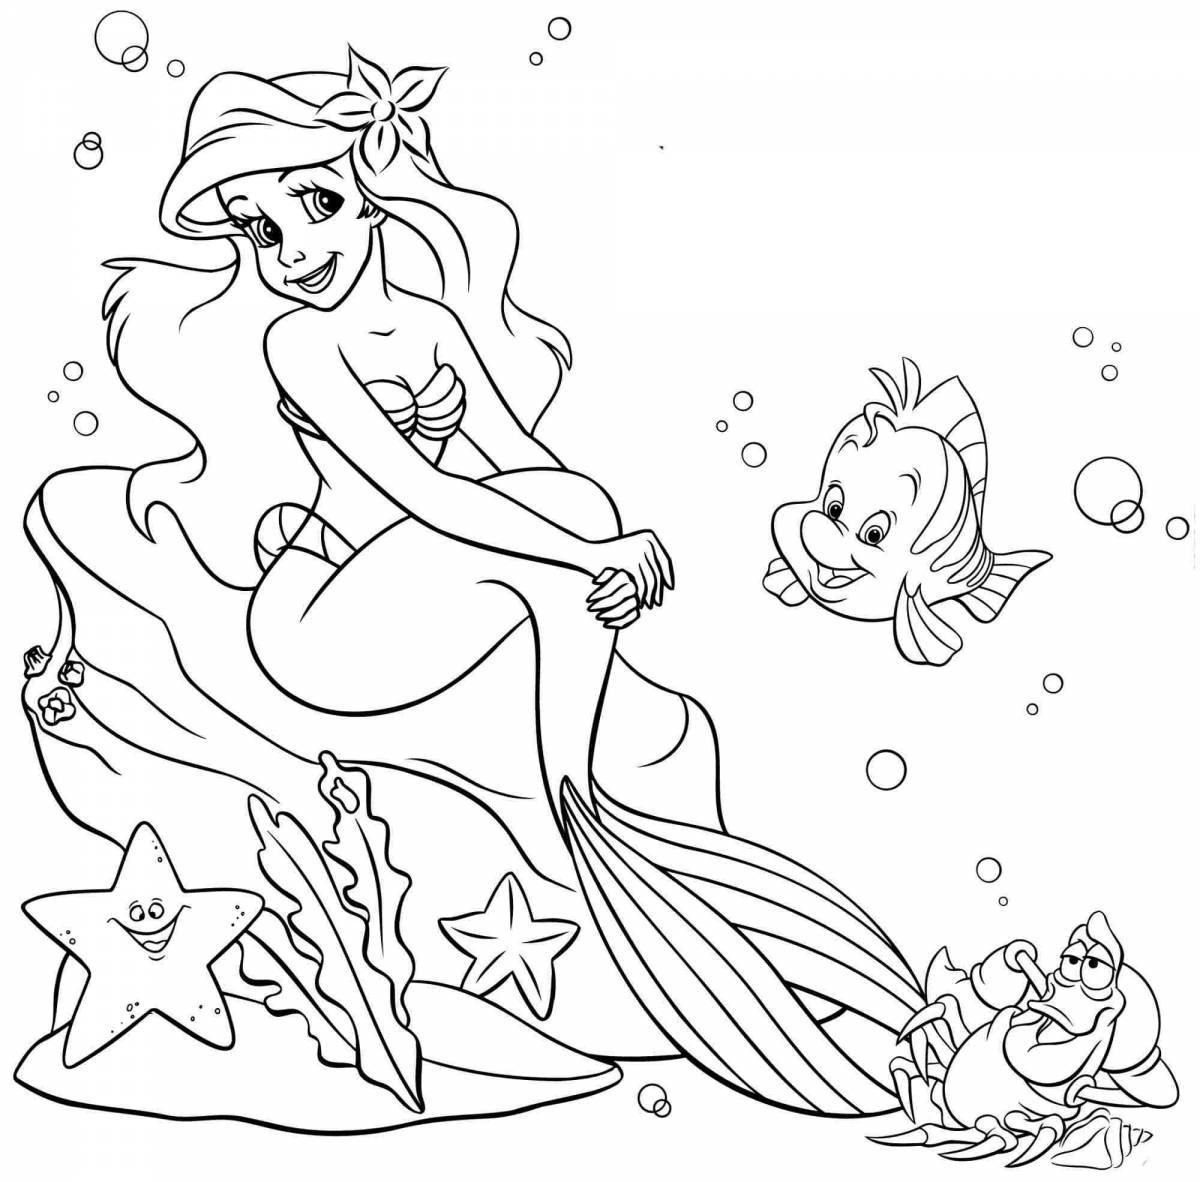 Playful coloring mermaid